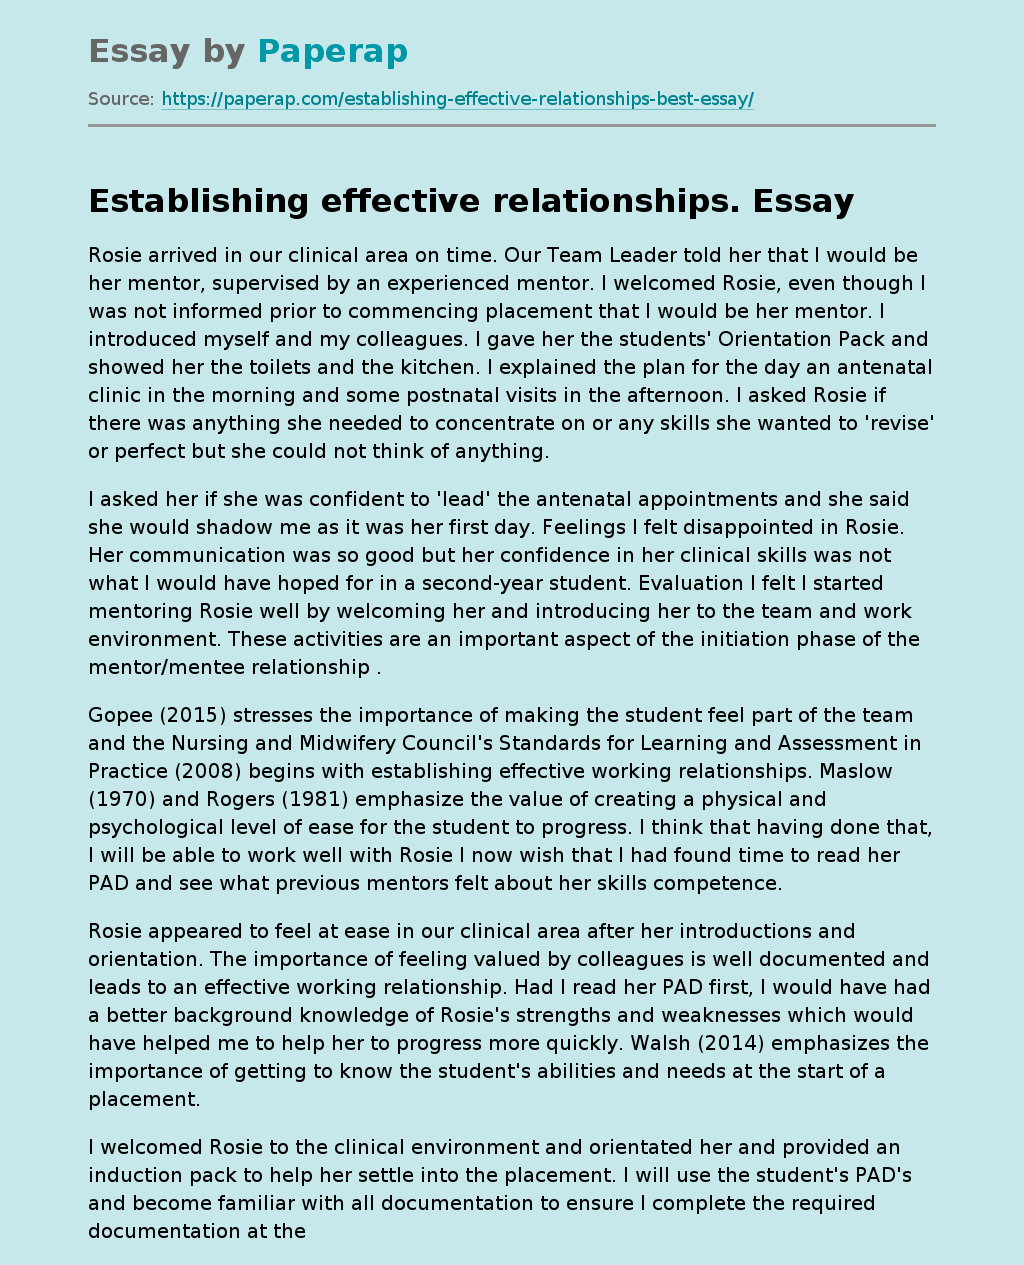 essay relationships